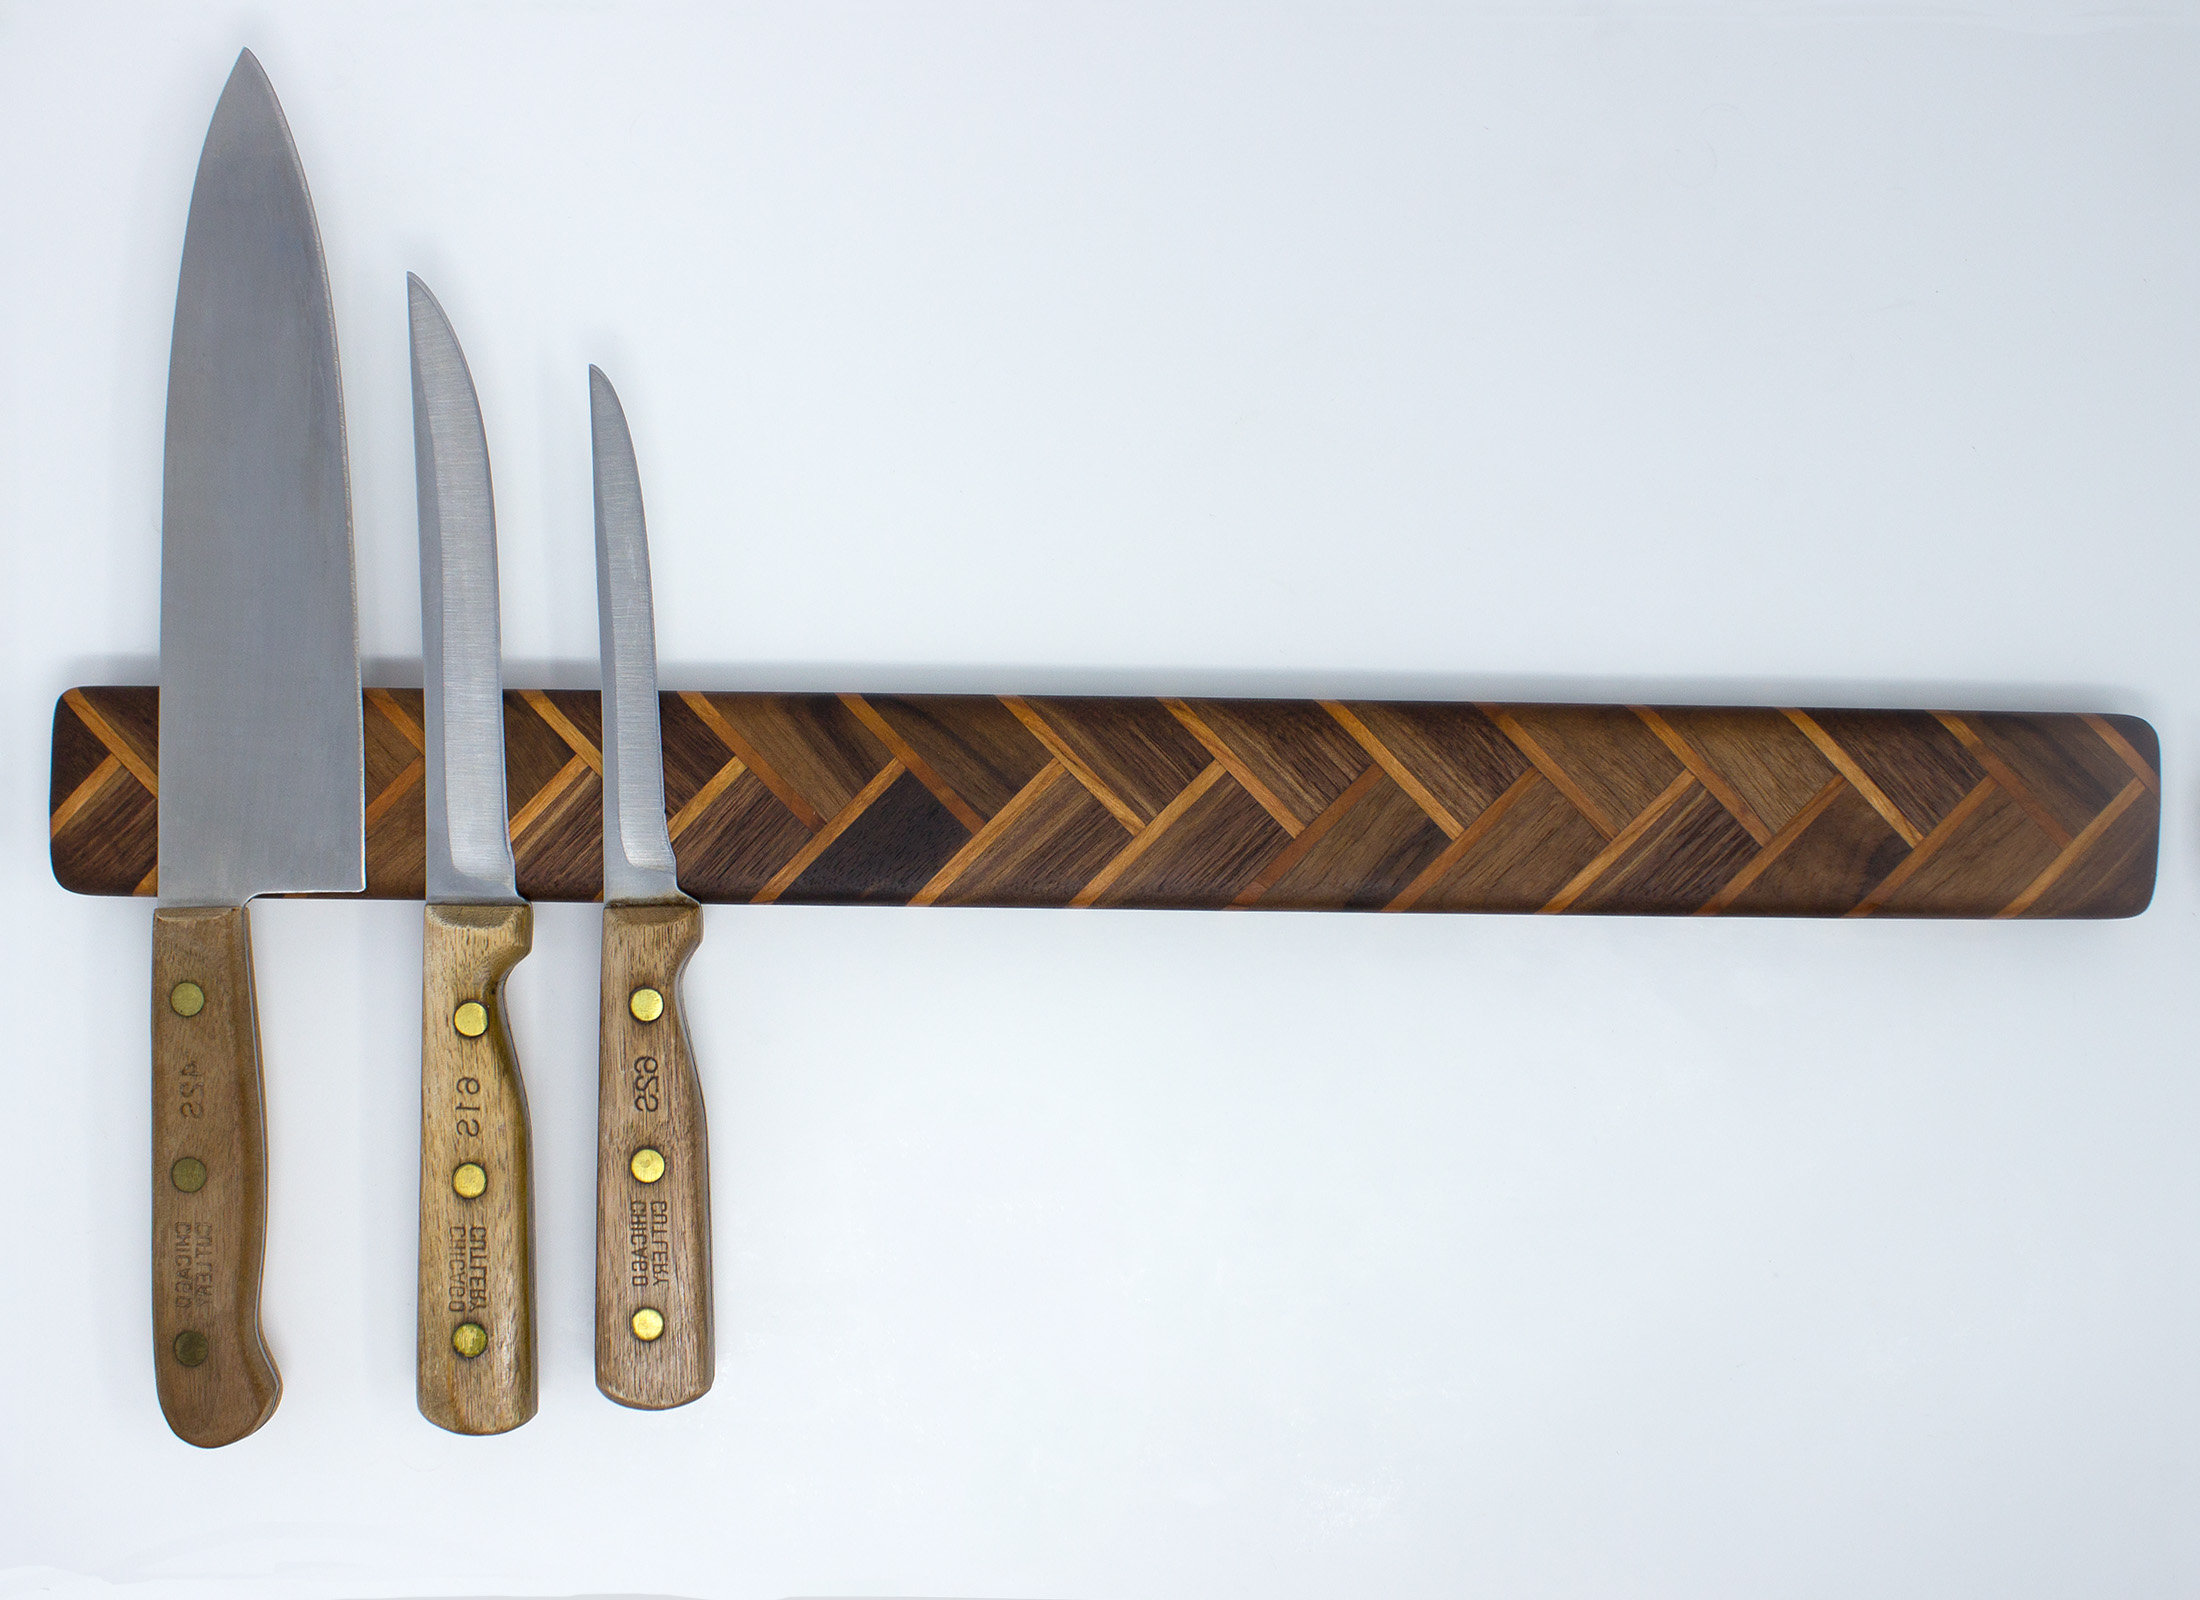 BUY RSCHEF Best Magnetic Knife Holder ON SALE NOW! - Wooden Earth